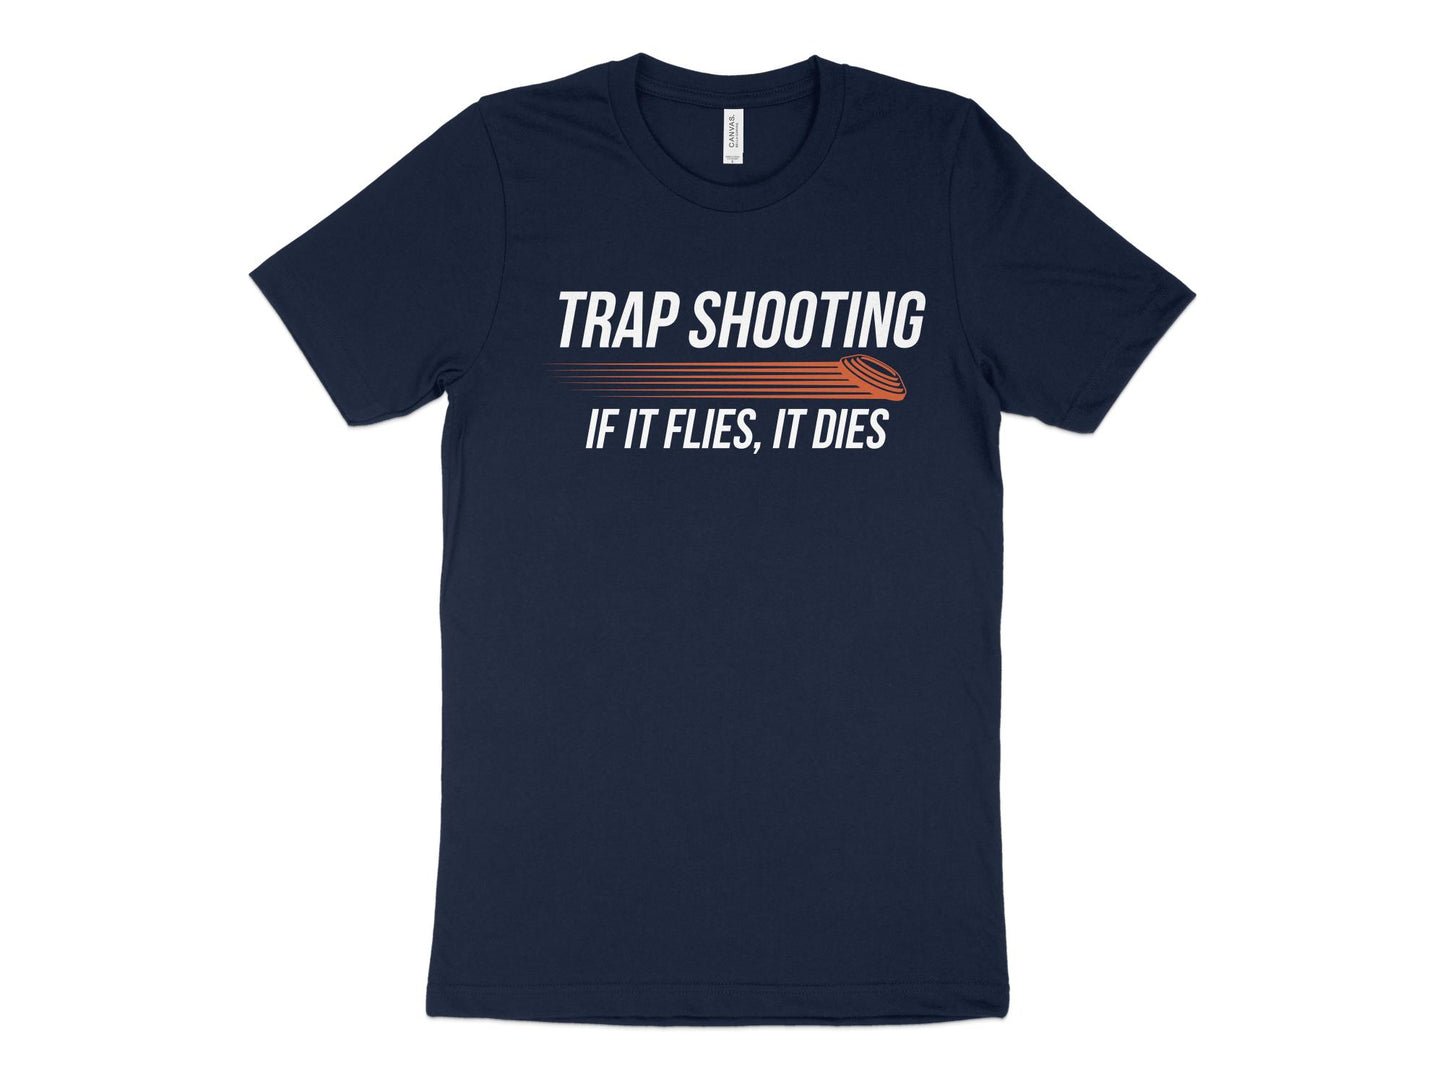 Trap Shooting Shirt, If It Flies It Dies, navy blue